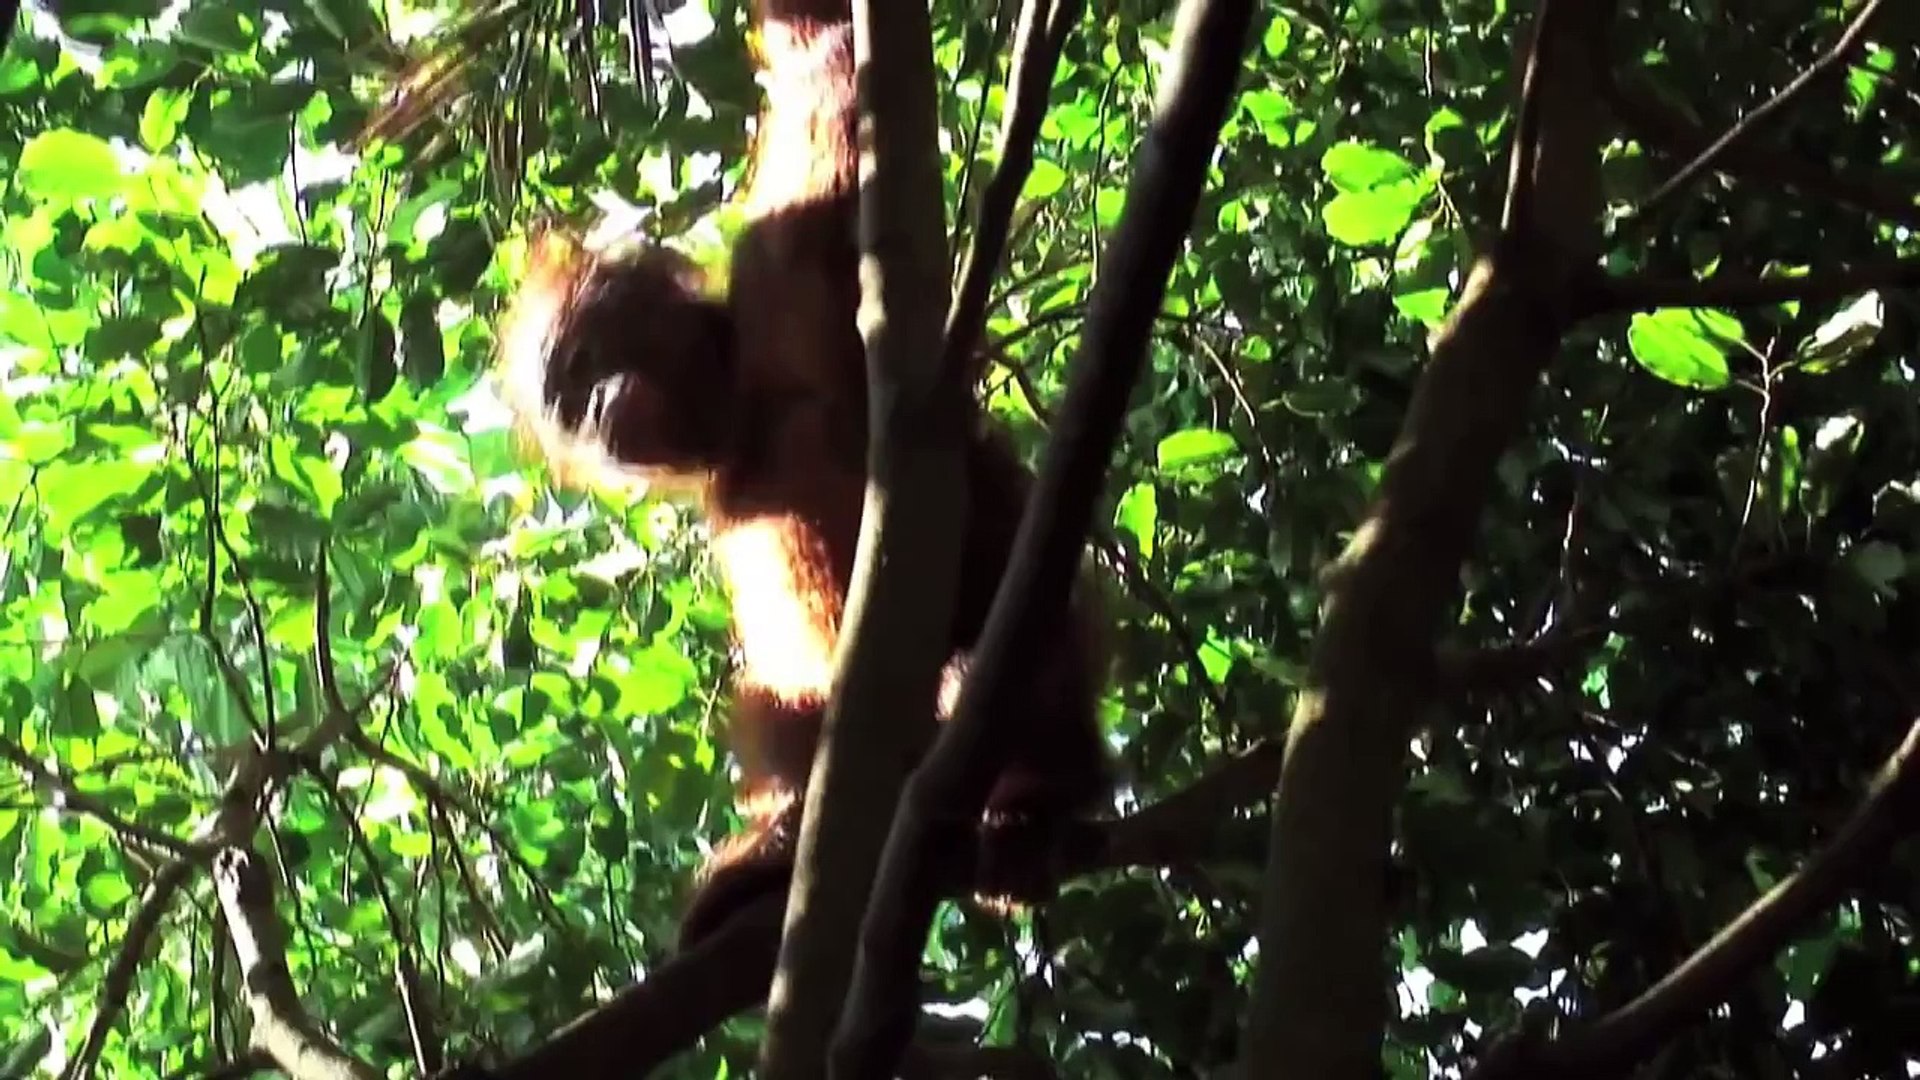 Orangutan rescue and rehabilitation project, Borneo